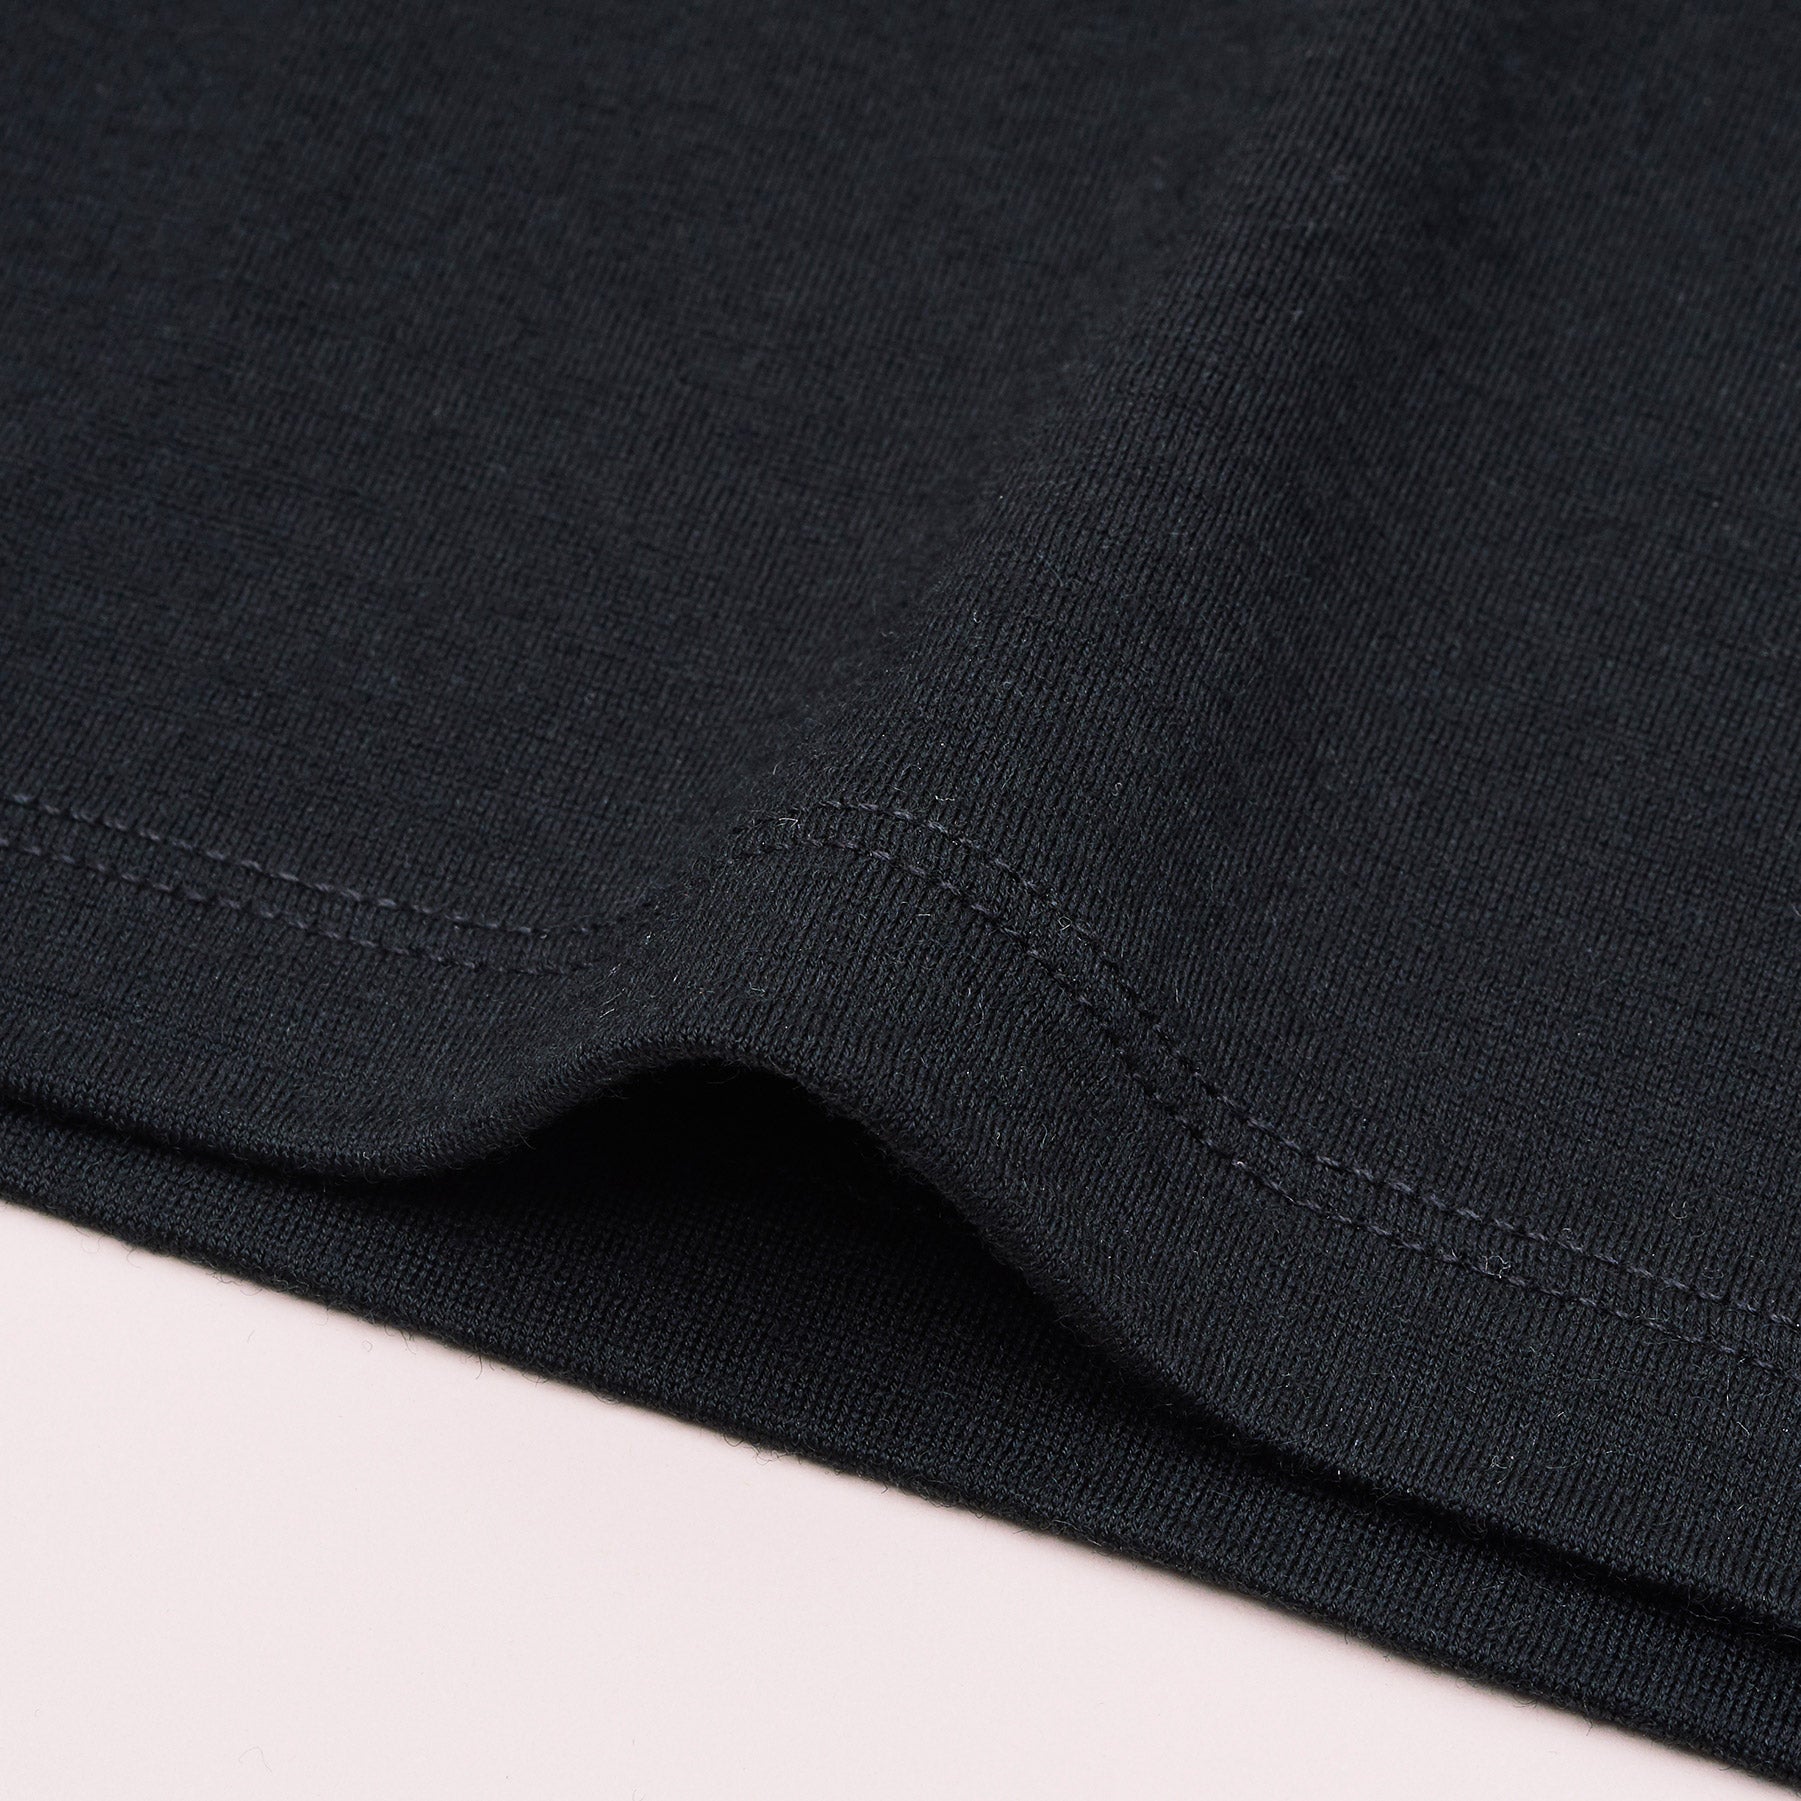 The Merino Wool T-Shirt - 100% Wool - 200g fabric - Woolday